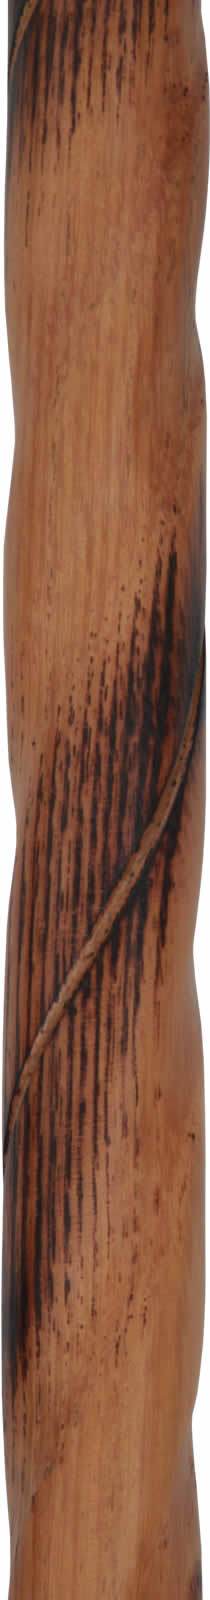 Comoys Polished Light Spiral Tourist Handle Walking Cane With Acacia Wood Shaft